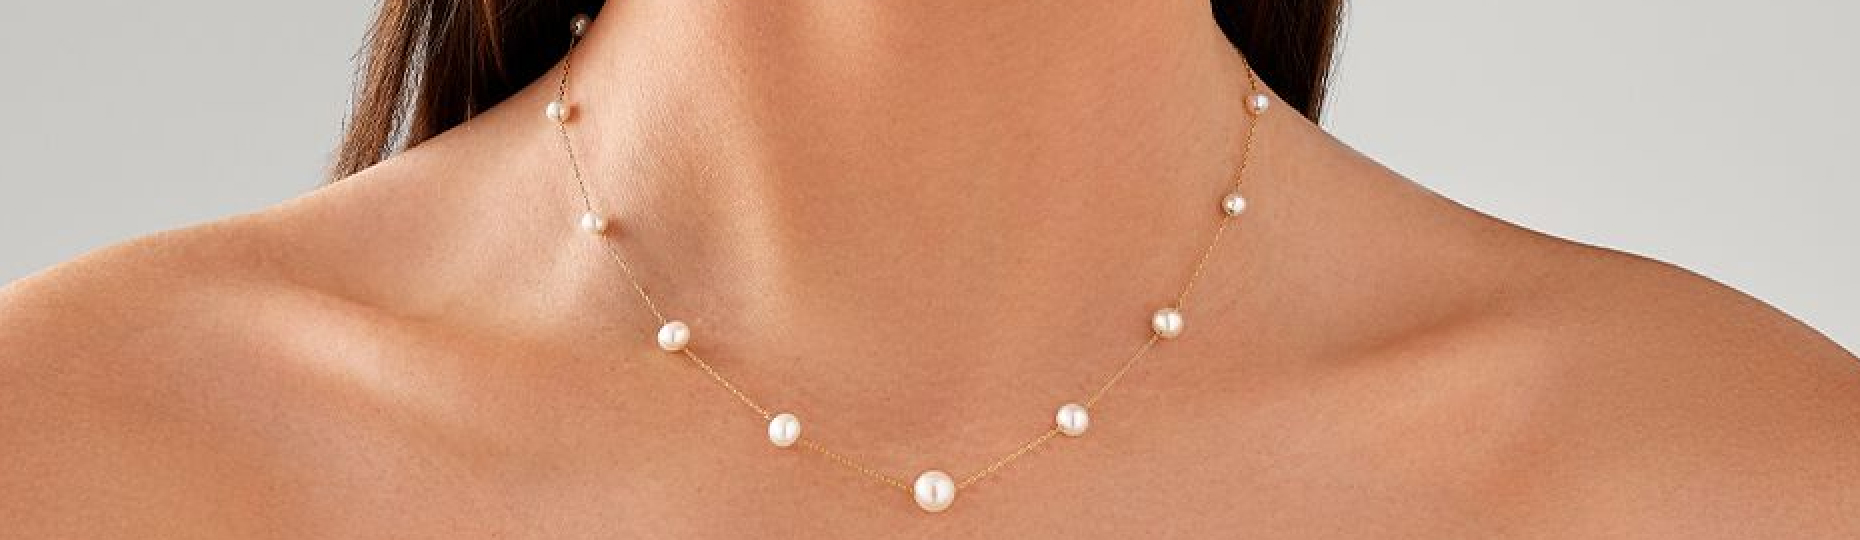 woman wearing pearls 30th wedding anniversary gift